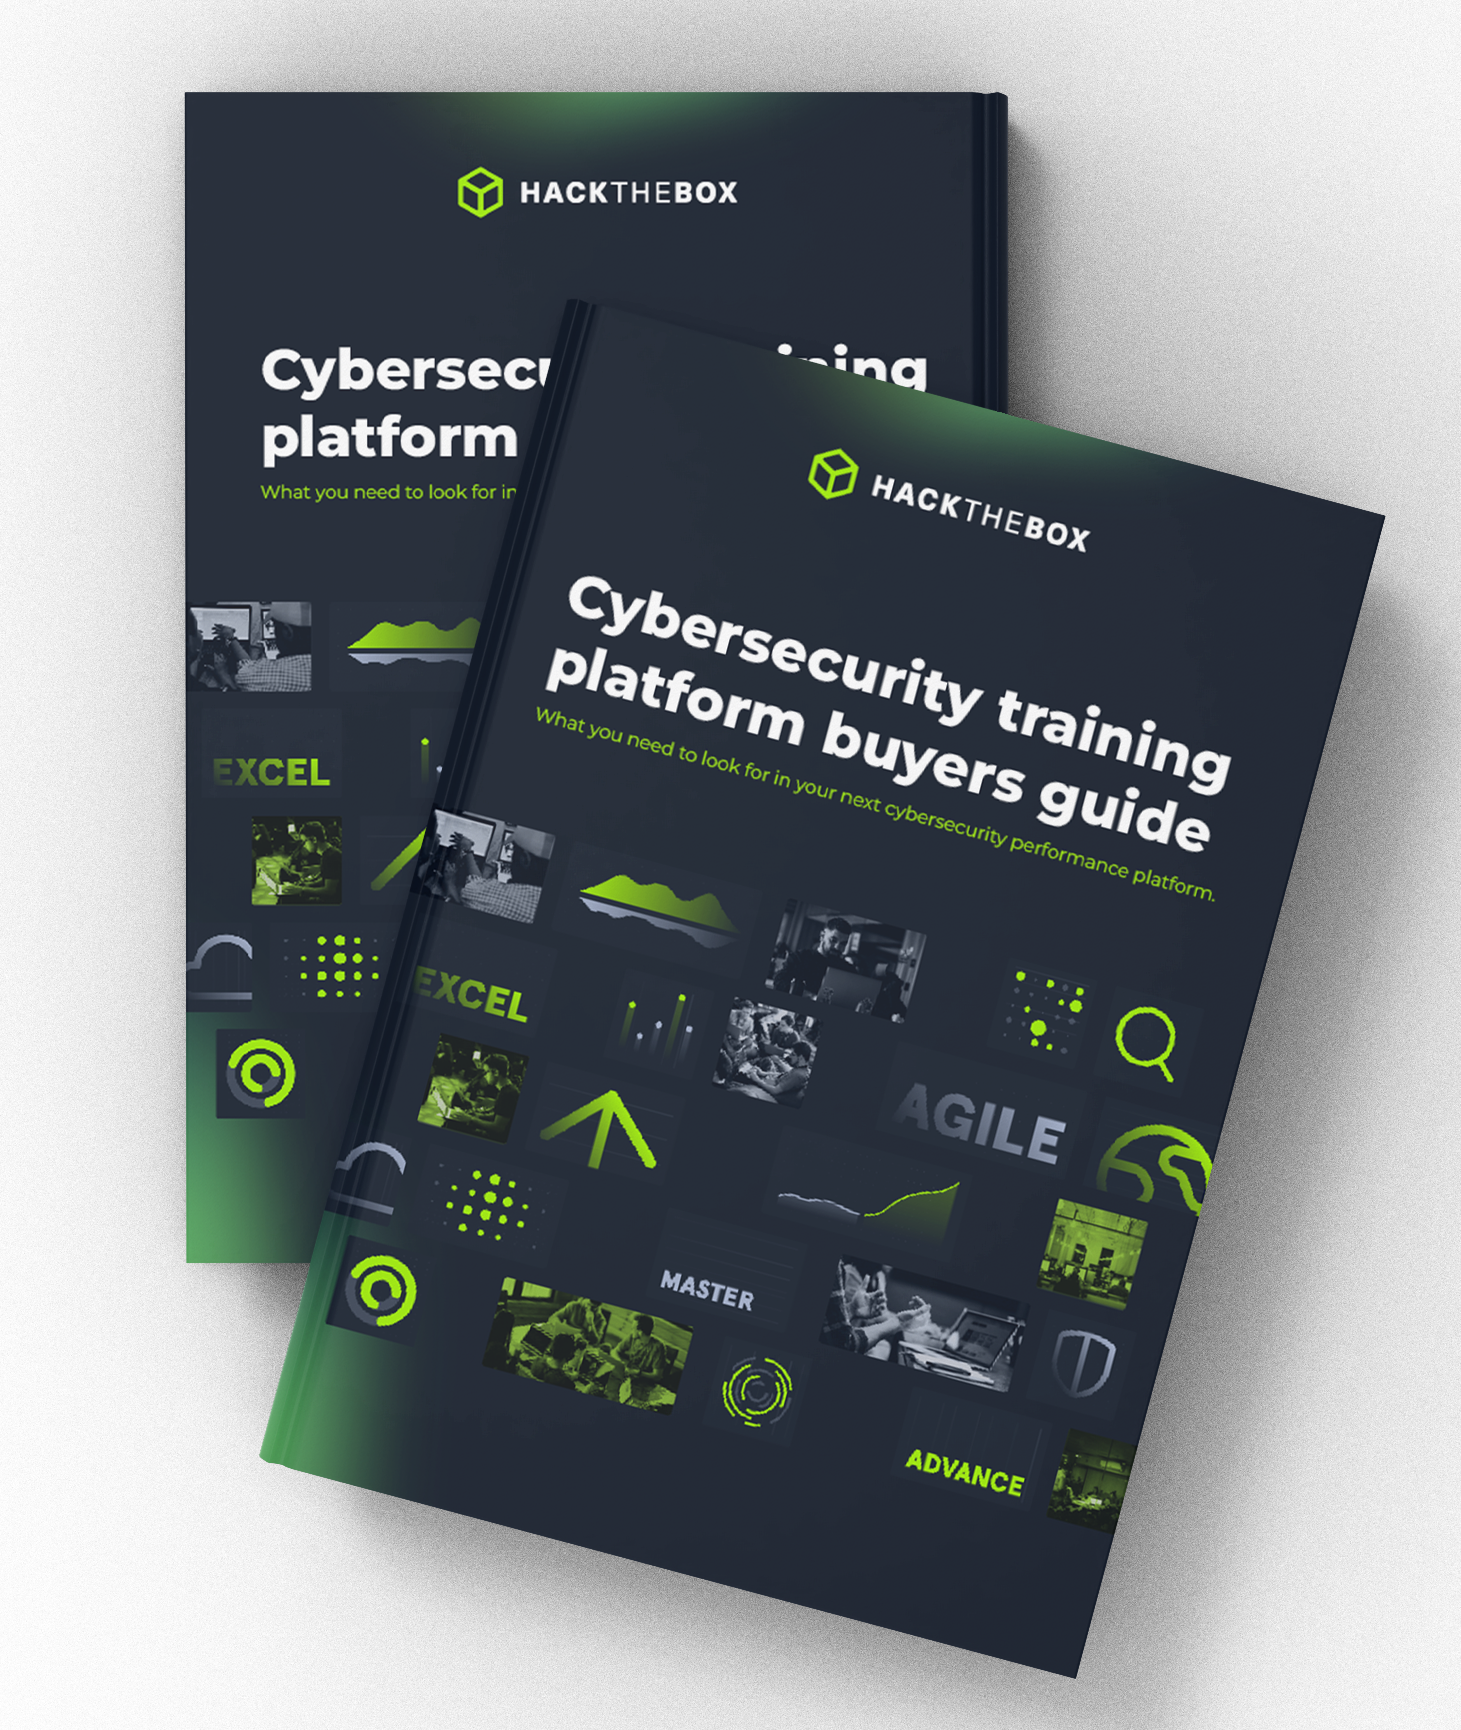 Cybersecurity_training_platform_buyers_guide_MockUp